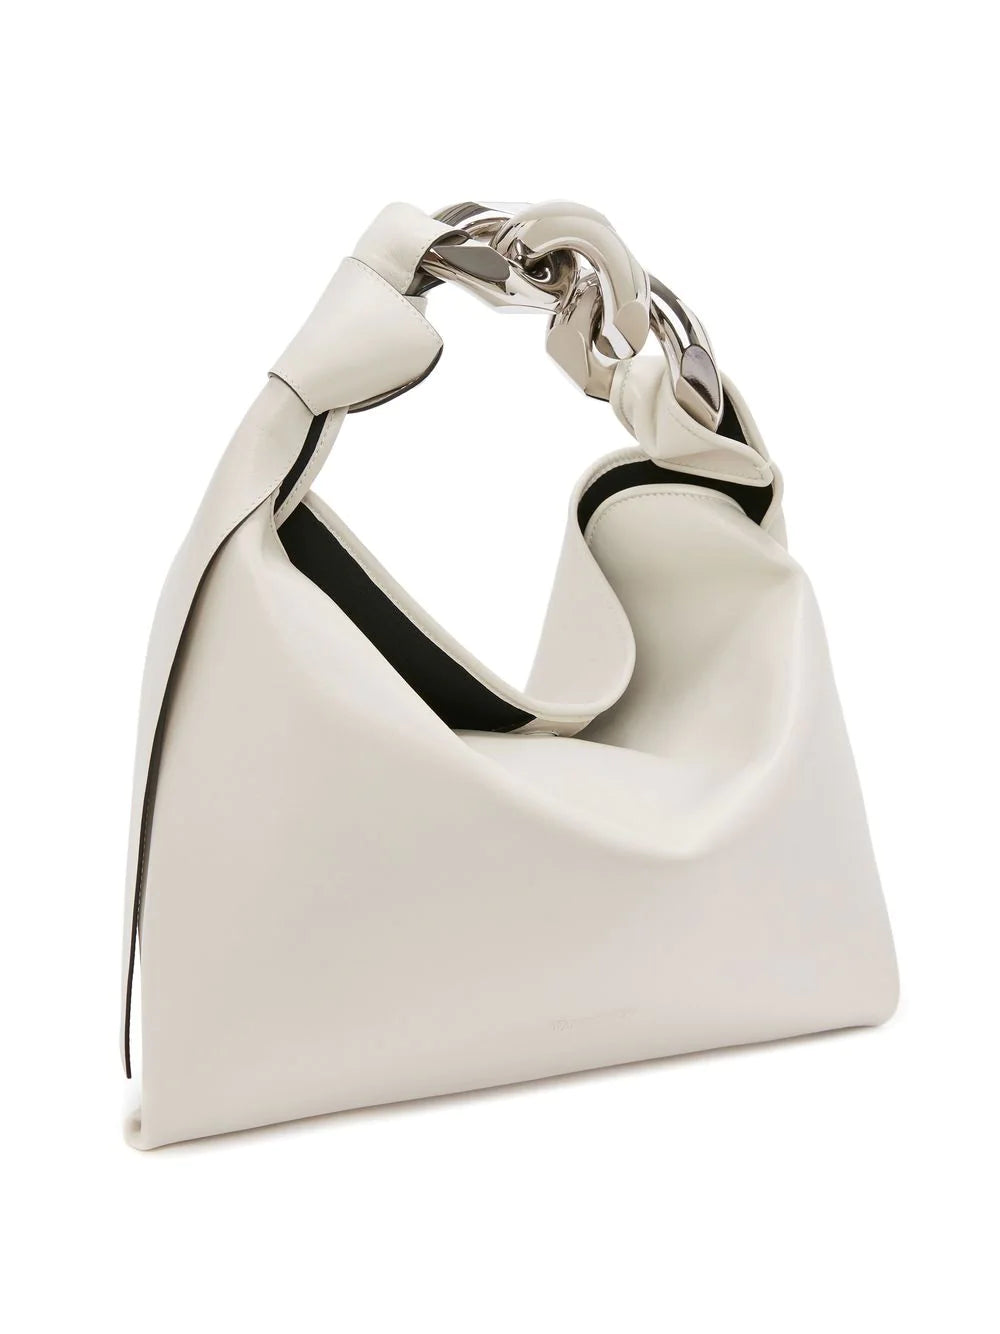 Small Chain Hobo Shoulder Bag - White